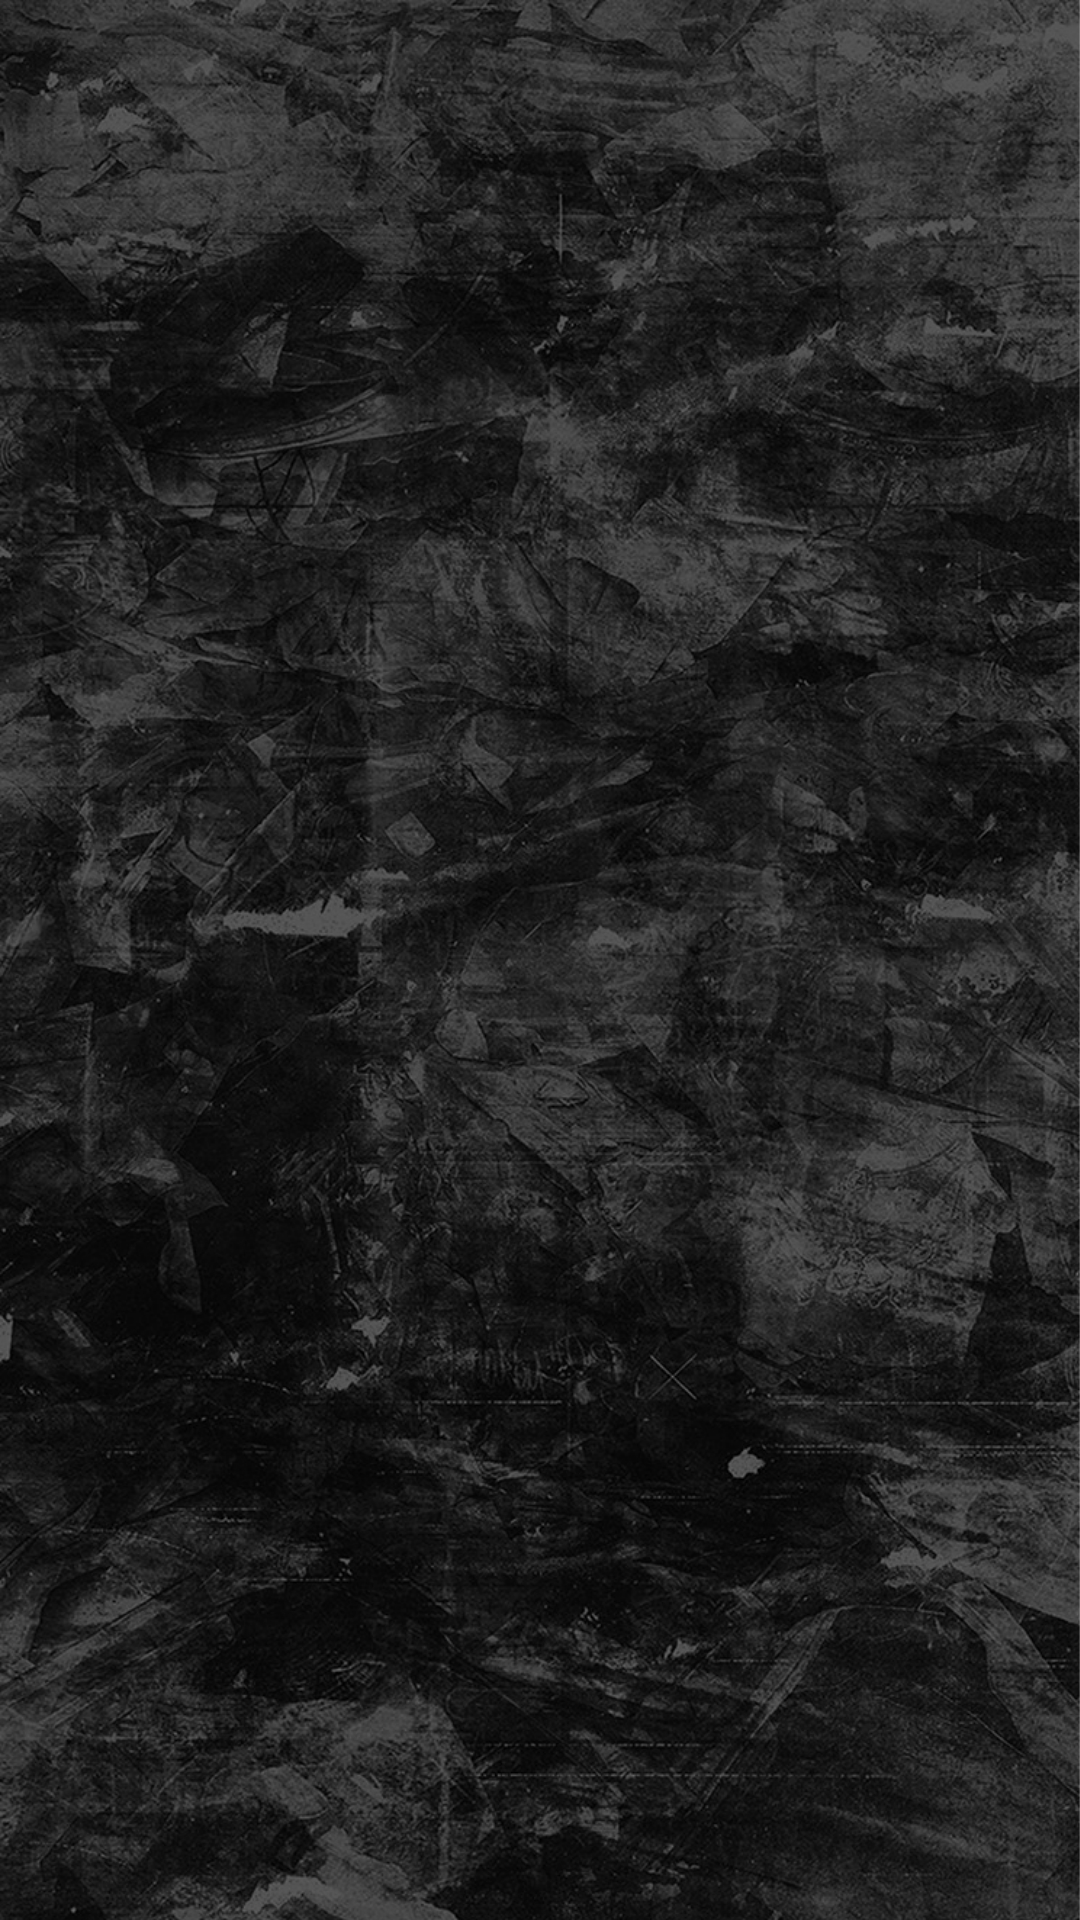 Wonder Art Illust Grunge Abstract Black iPhone 8 Wallpaper Free Download